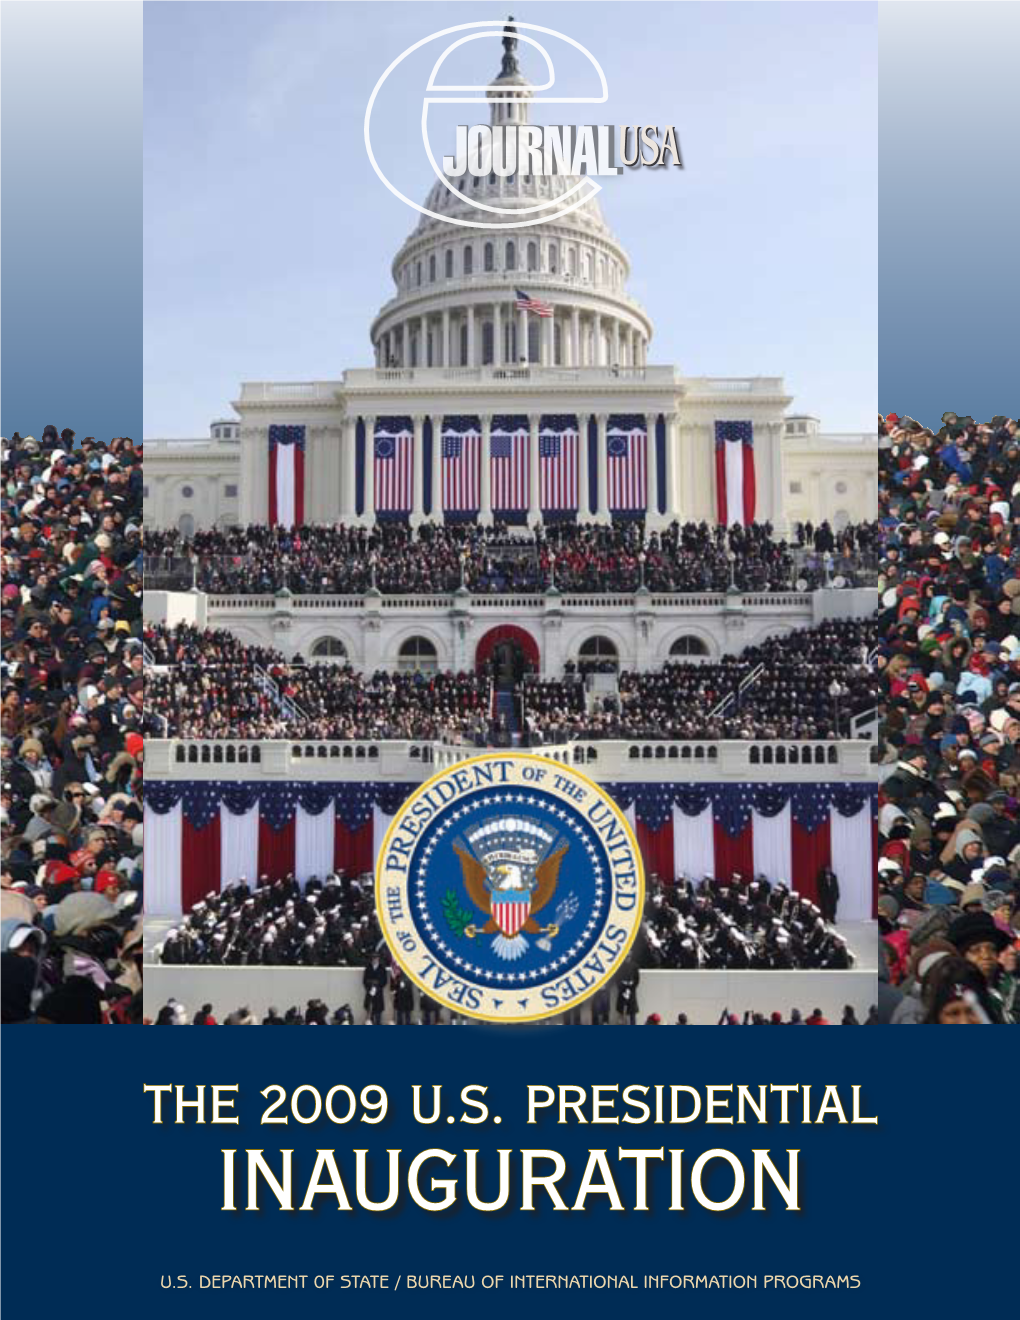 The 2009 U.S. PRESIDENTIAL Inauguration